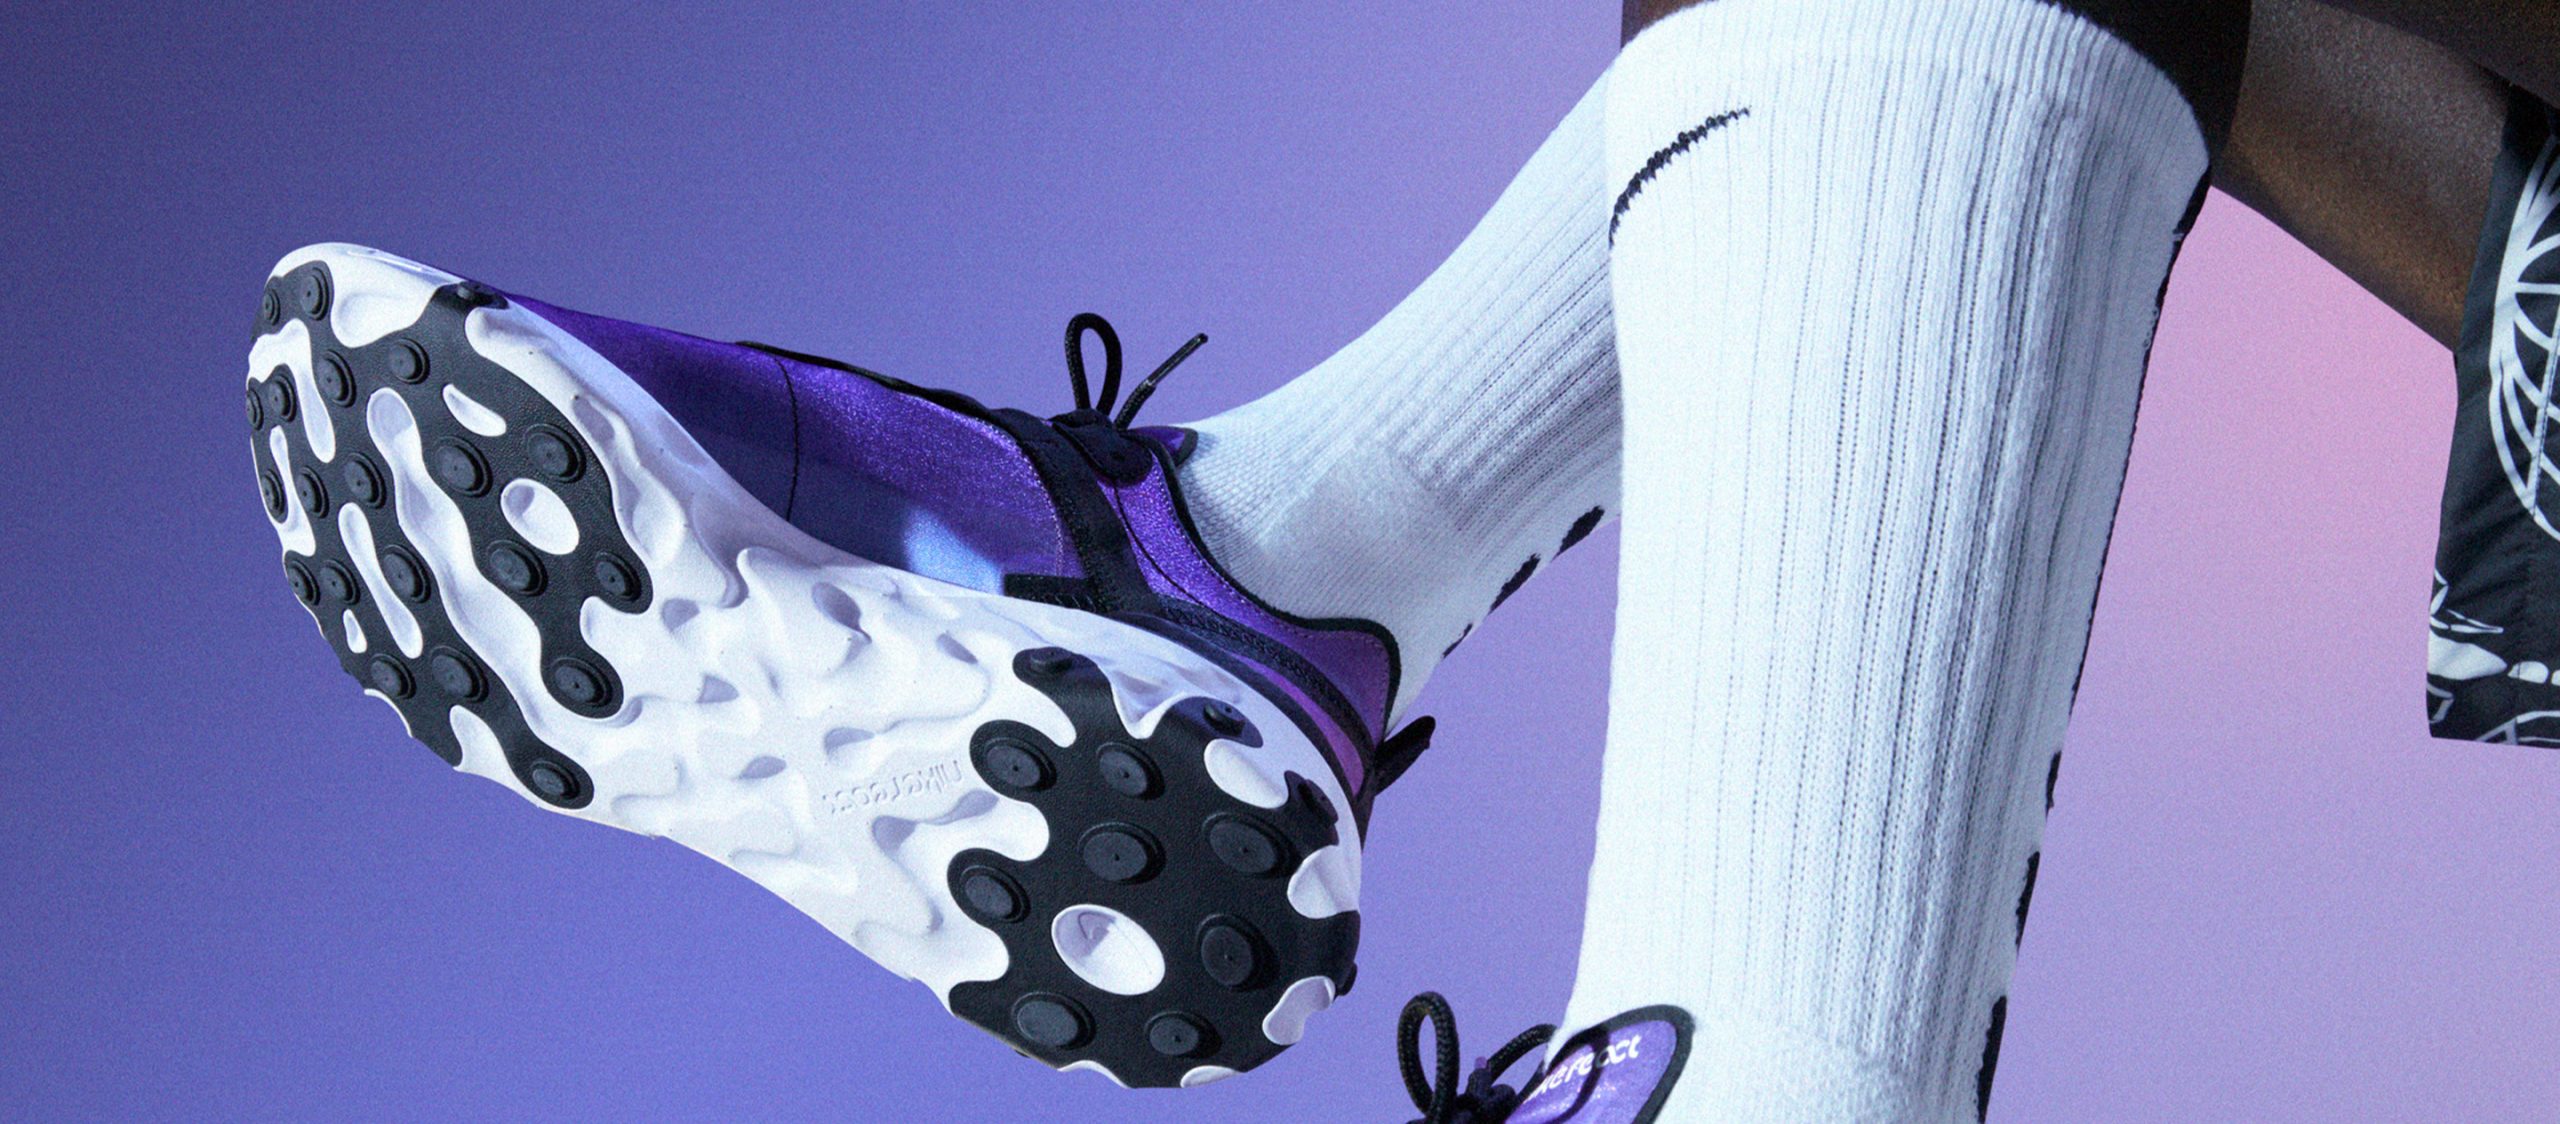 Nike React Element 55 รองเท้าไลฟ์สไตล์ที่พร้อมให้คุณได้เนรมิตสีสันด้วยตัวเอง